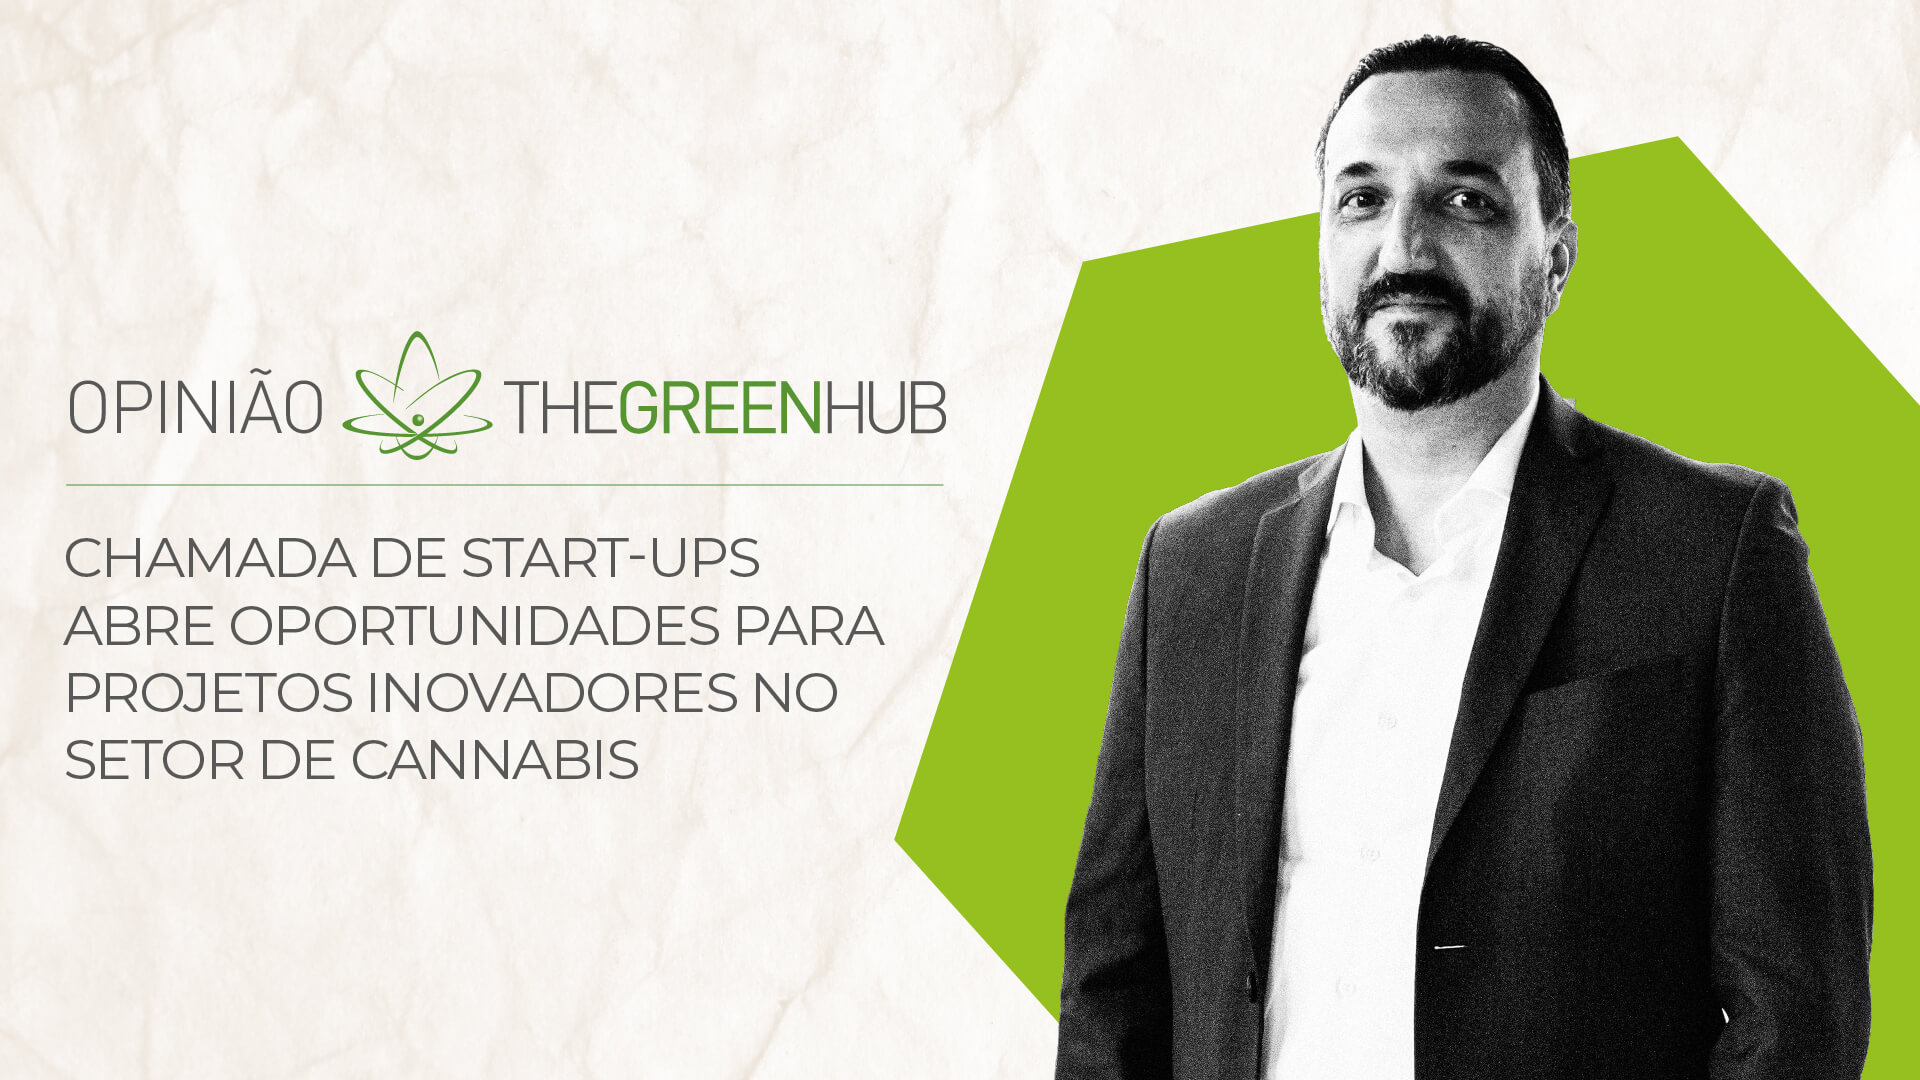 Chamada de start-ups abre oportunidades para projetos inovadores no setor de cannabis